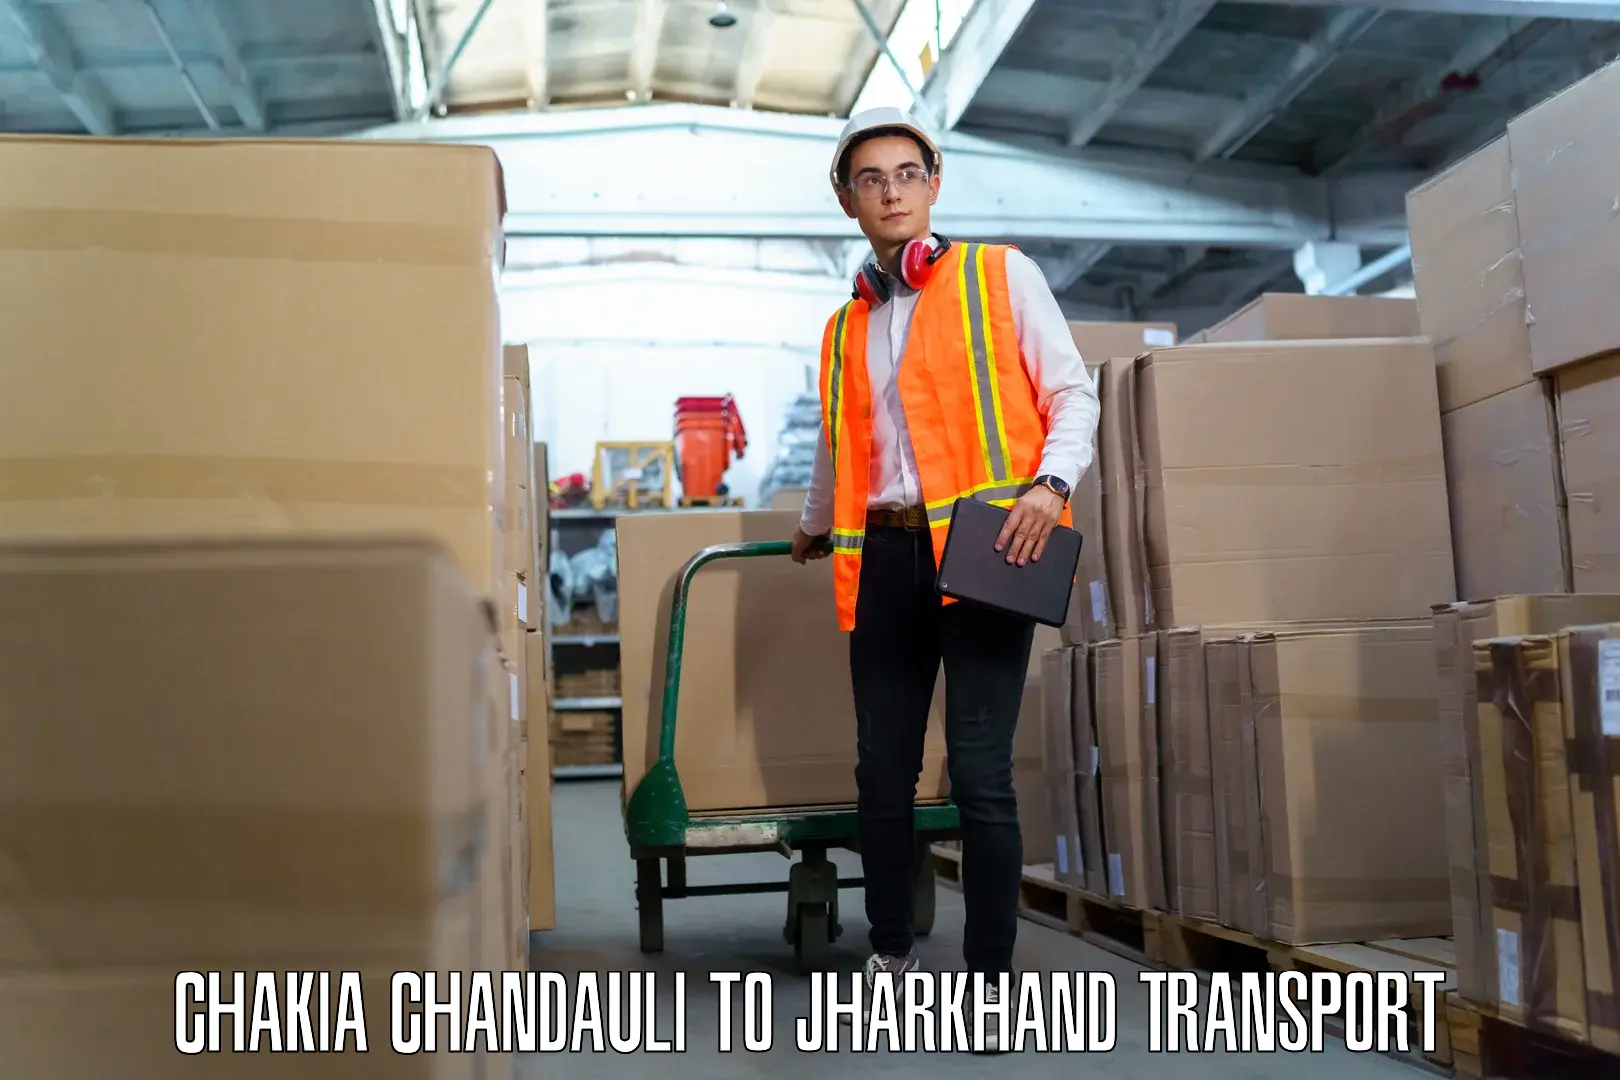 Truck transport companies in India Chakia Chandauli to Ranchi